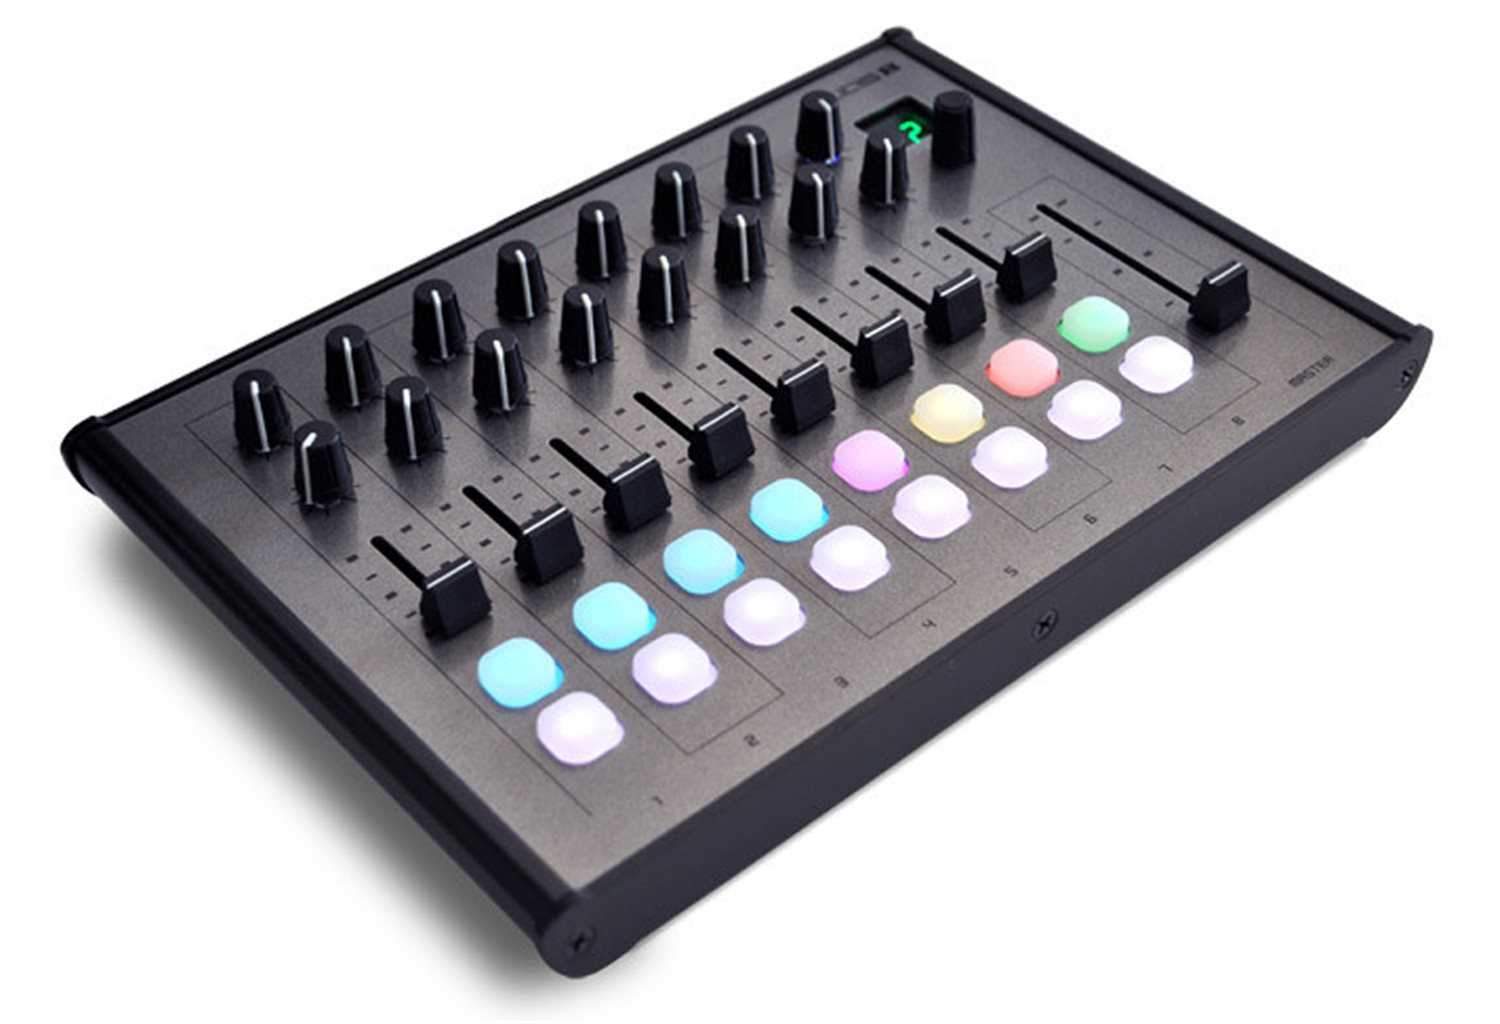 Livid Alias 8 USB MIDI Controller - PSSL ProSound and Stage Lighting